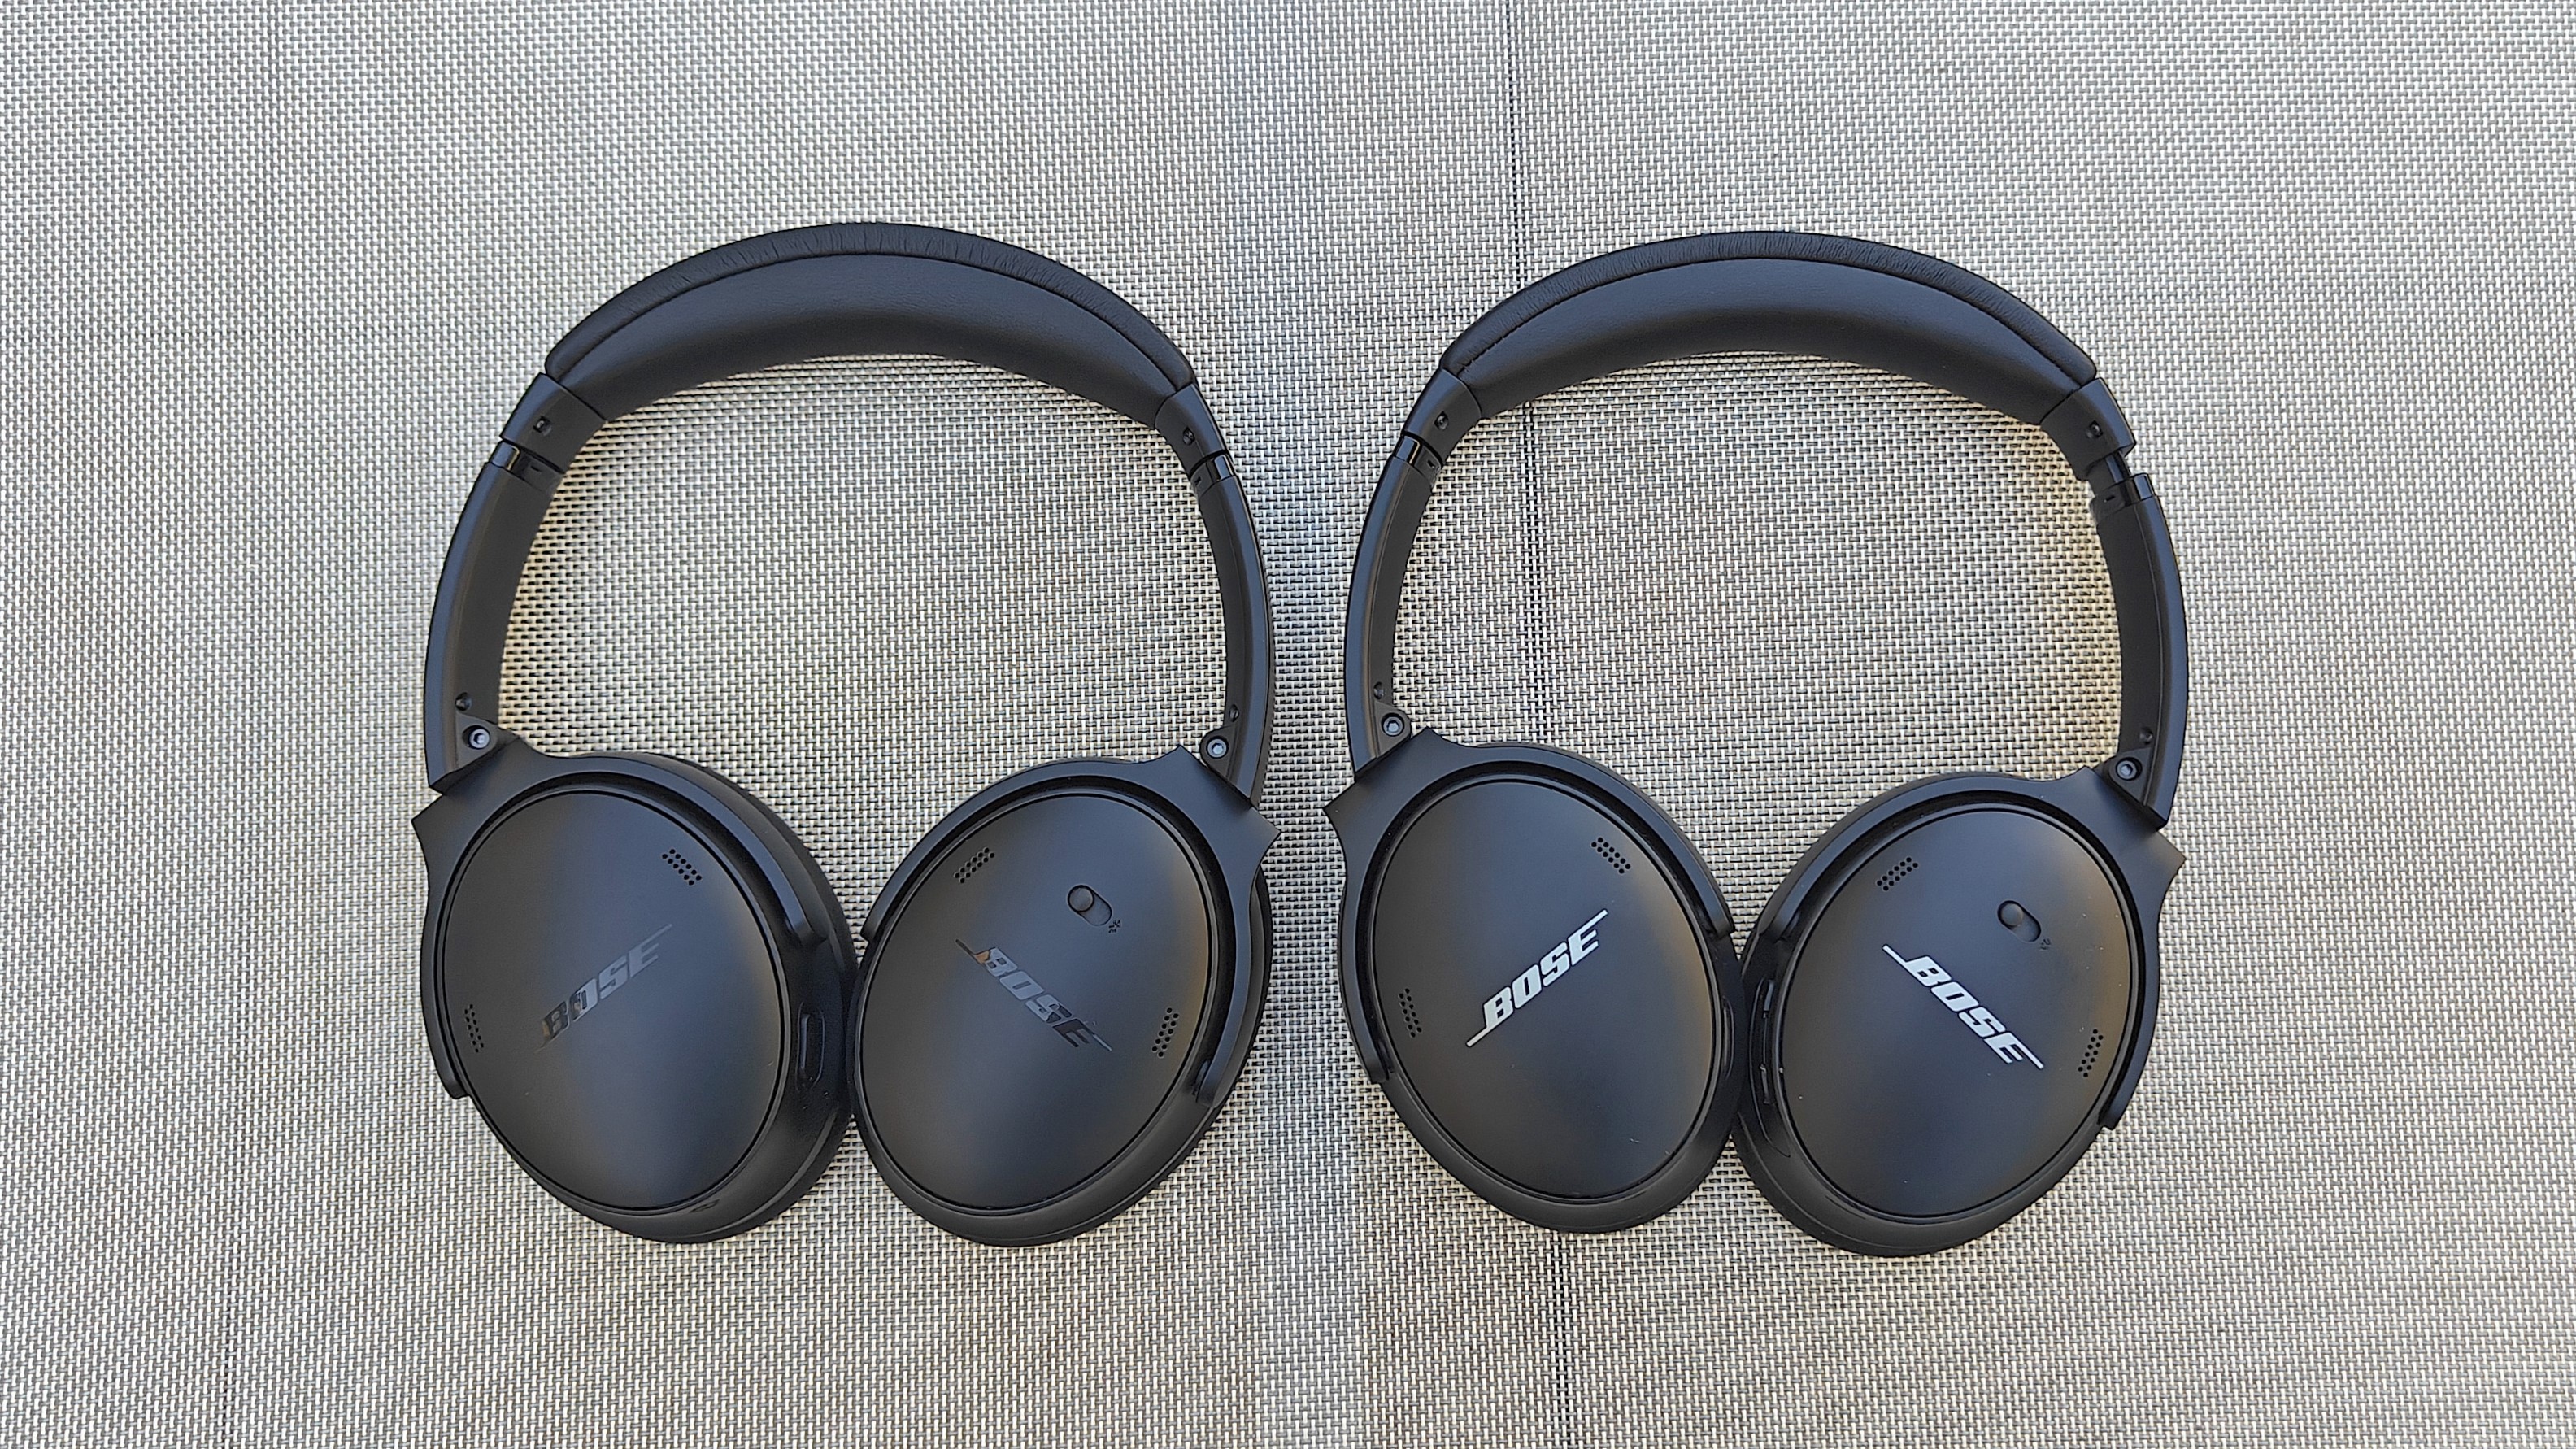 Bose updates QC45 ANC headphones with adjustable EQ